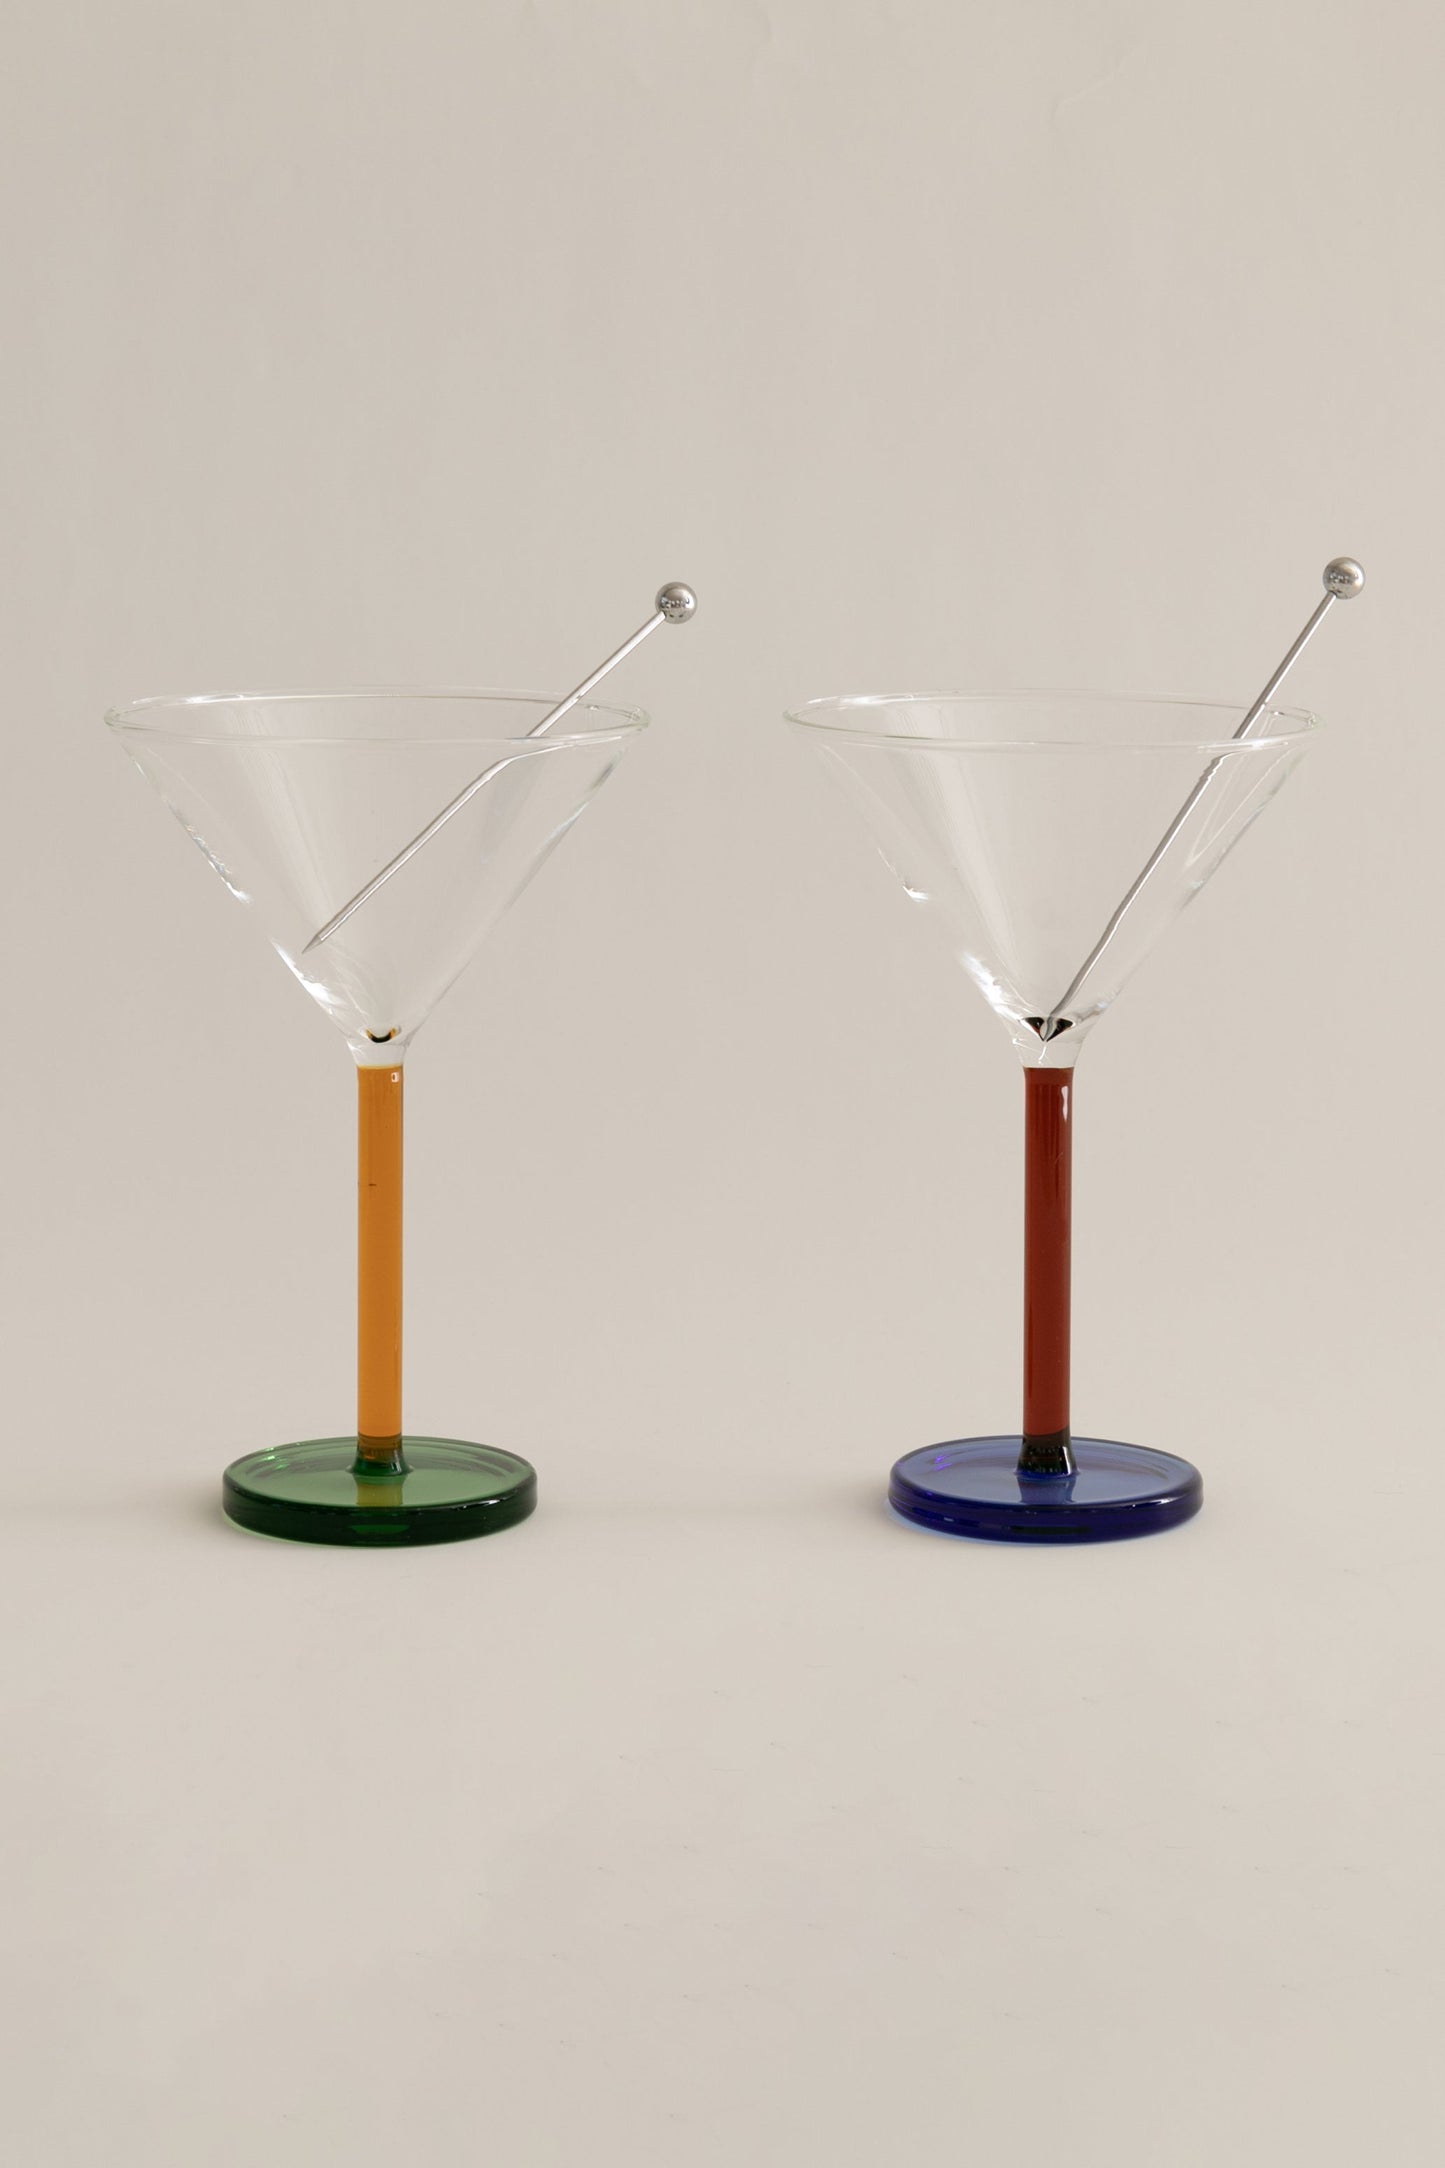 Piano Cocktail Set - Dizzy Decorative Objects